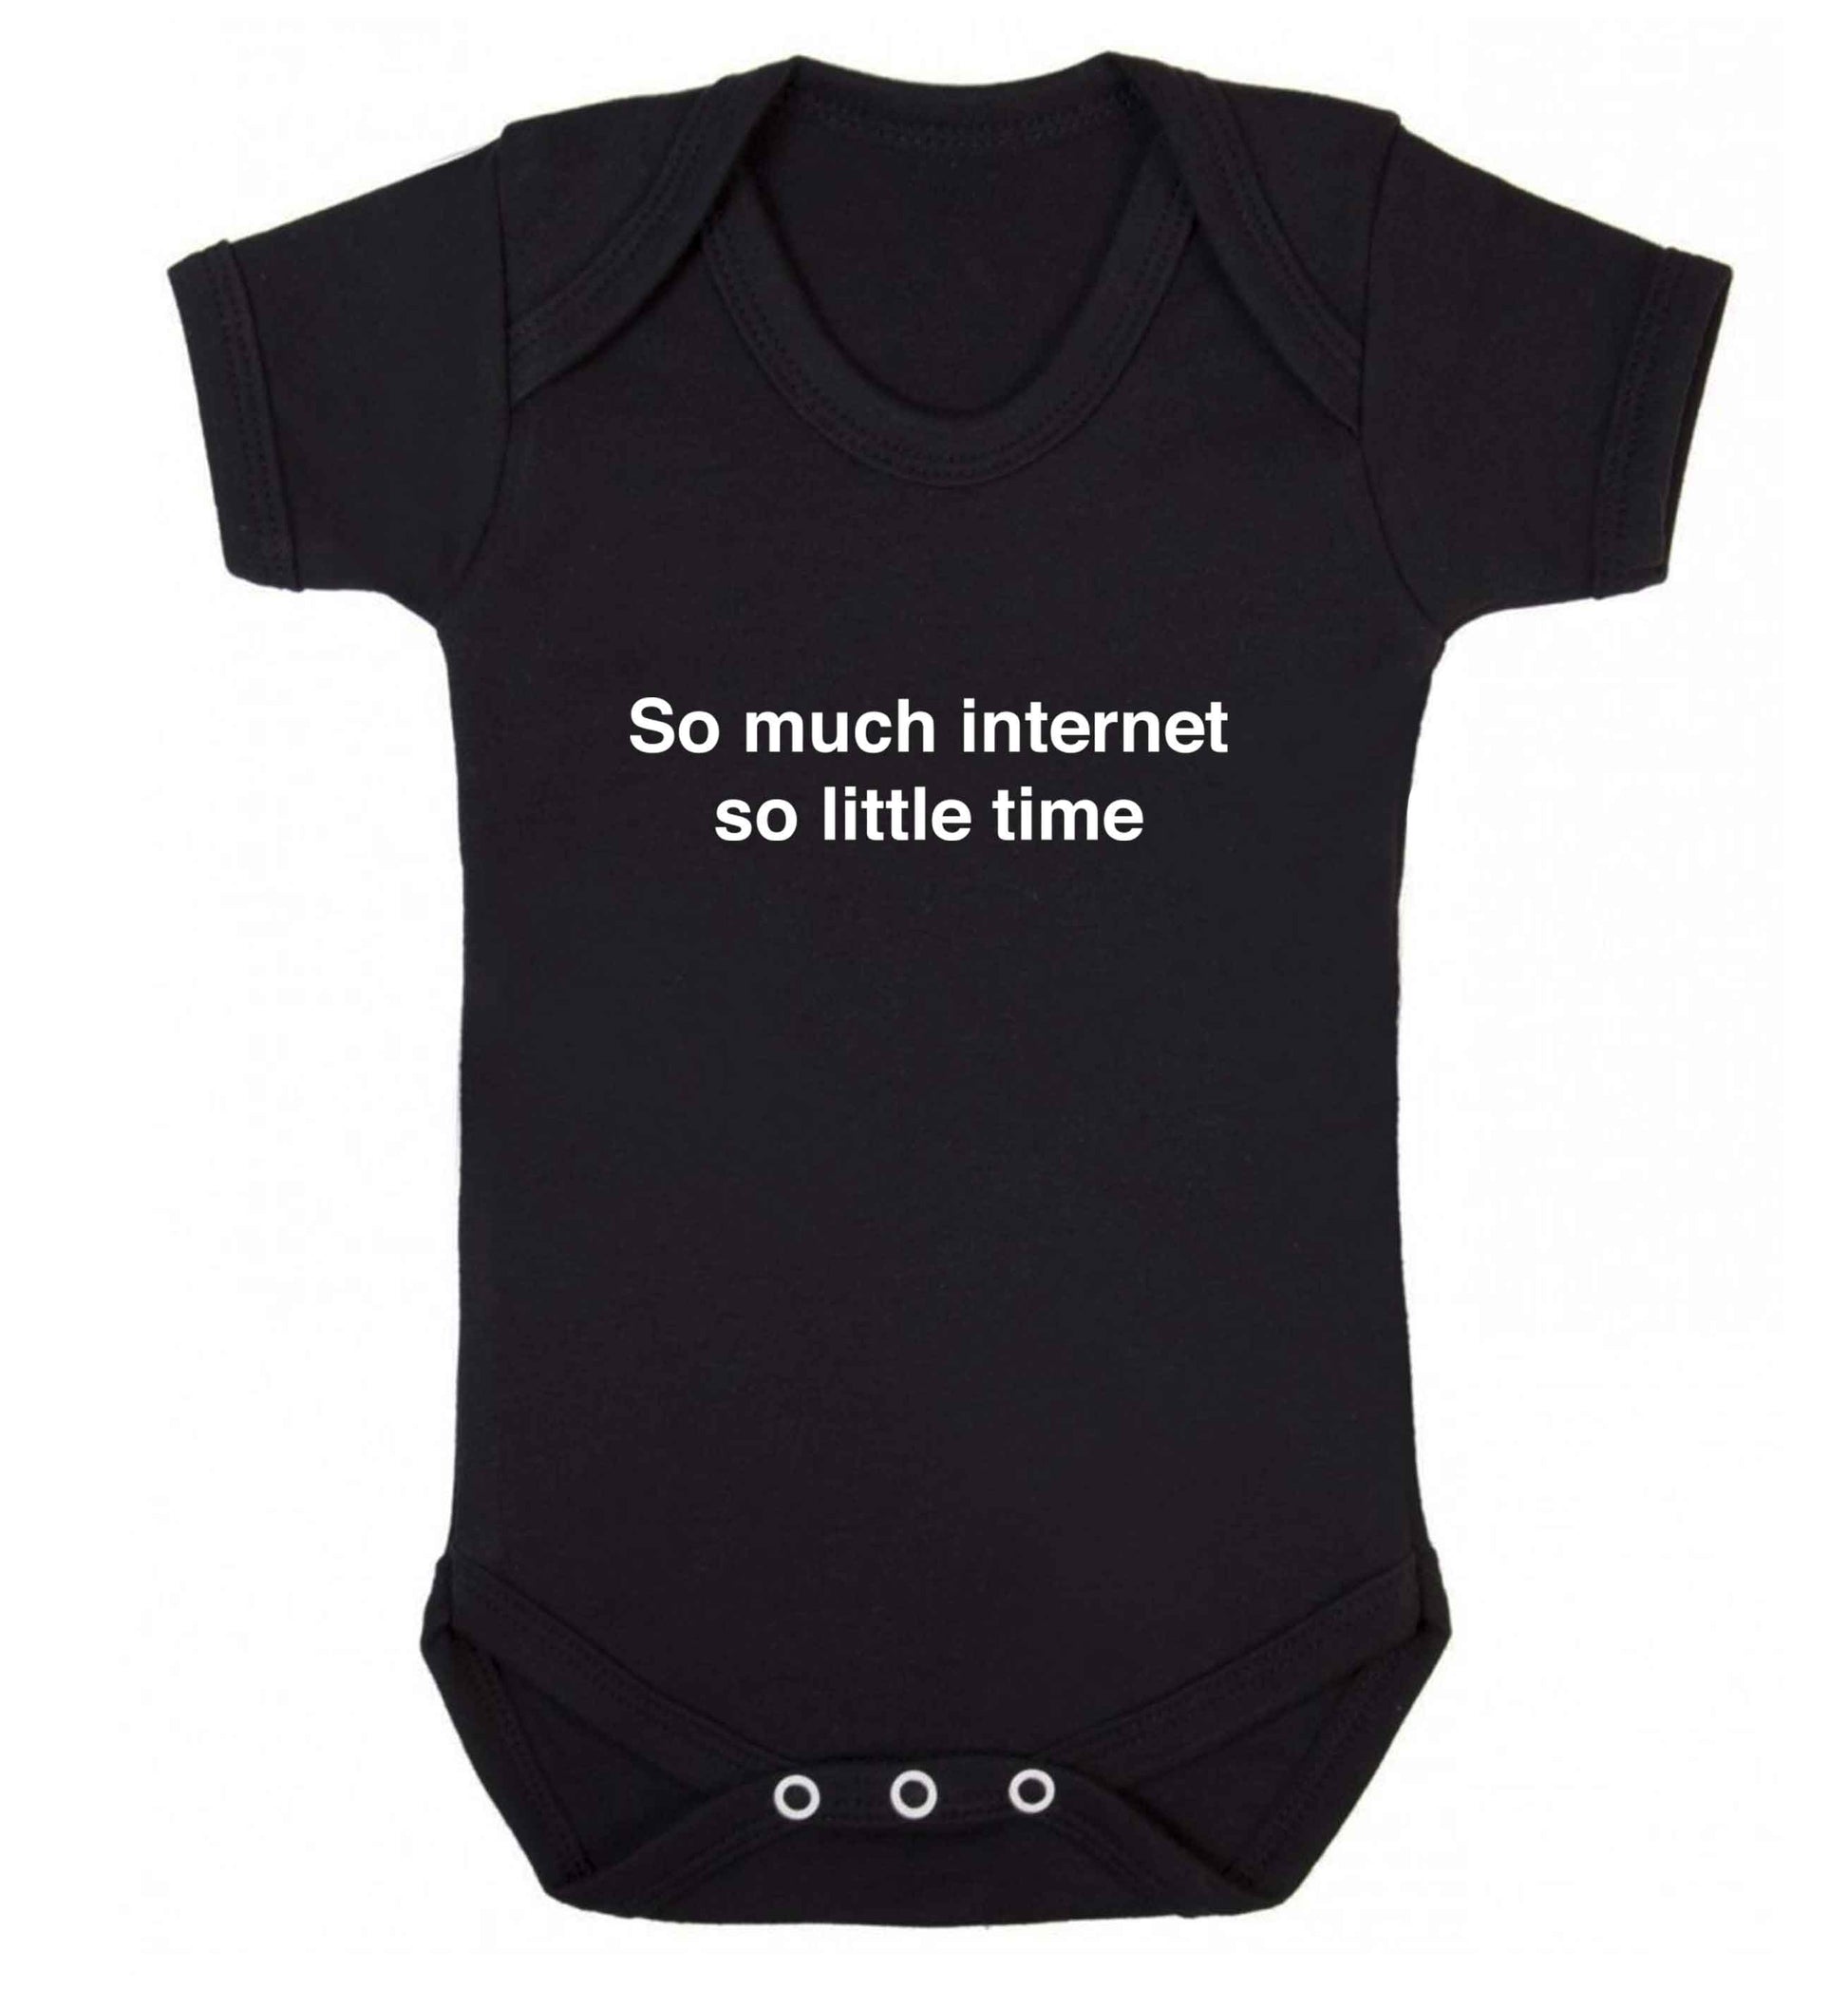 So much internet so little time baby vest black 18-24 months